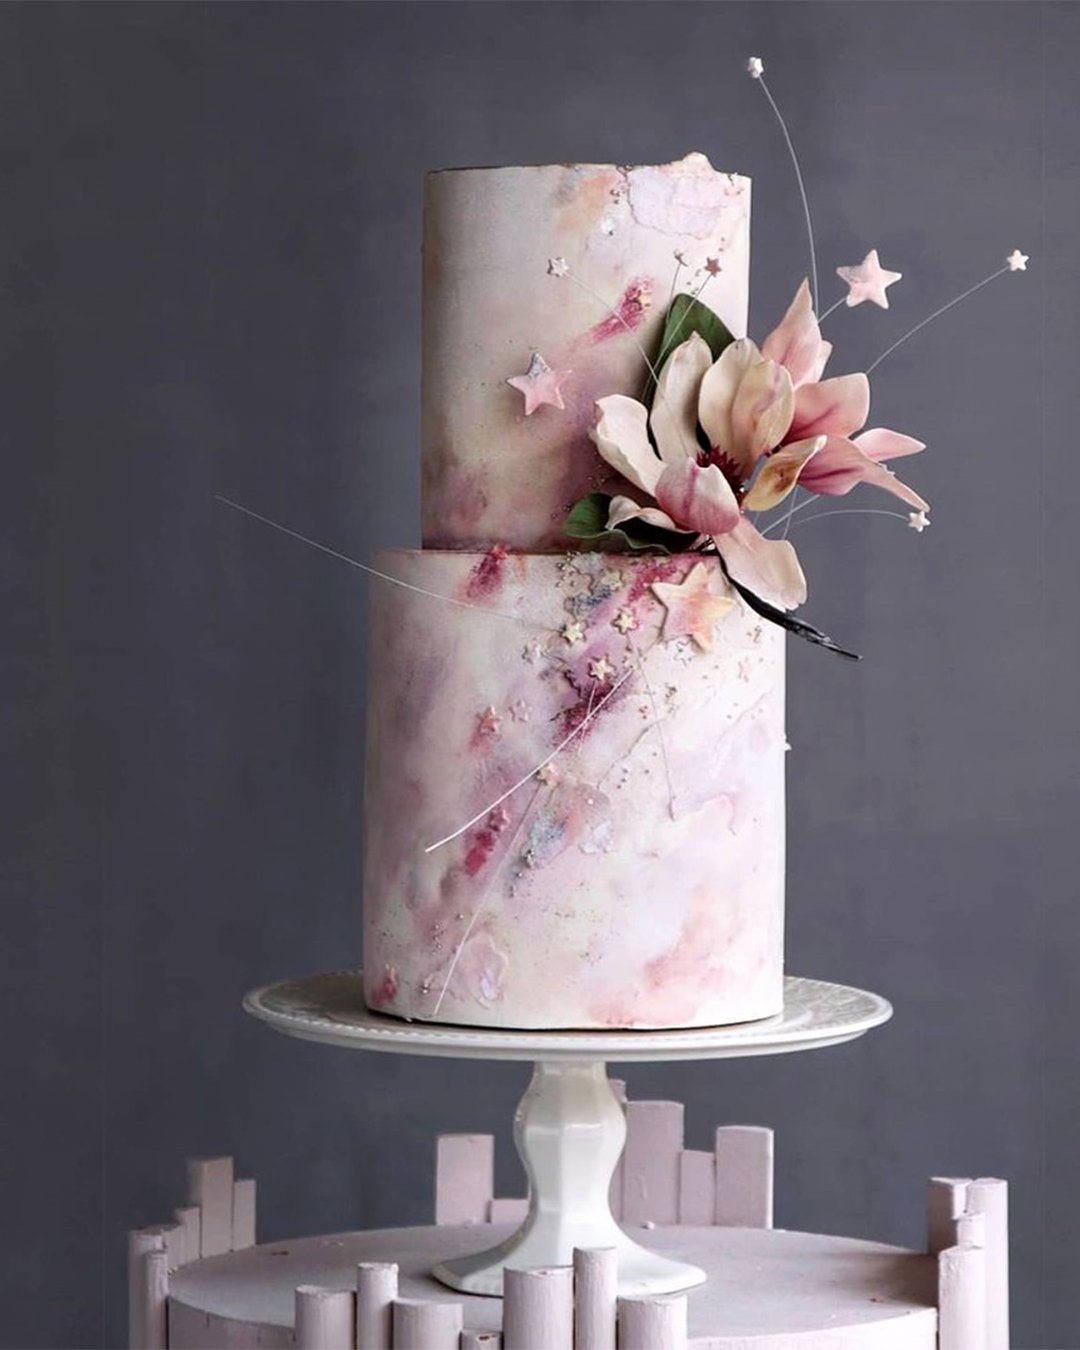 marble wedding cakes tender ideas